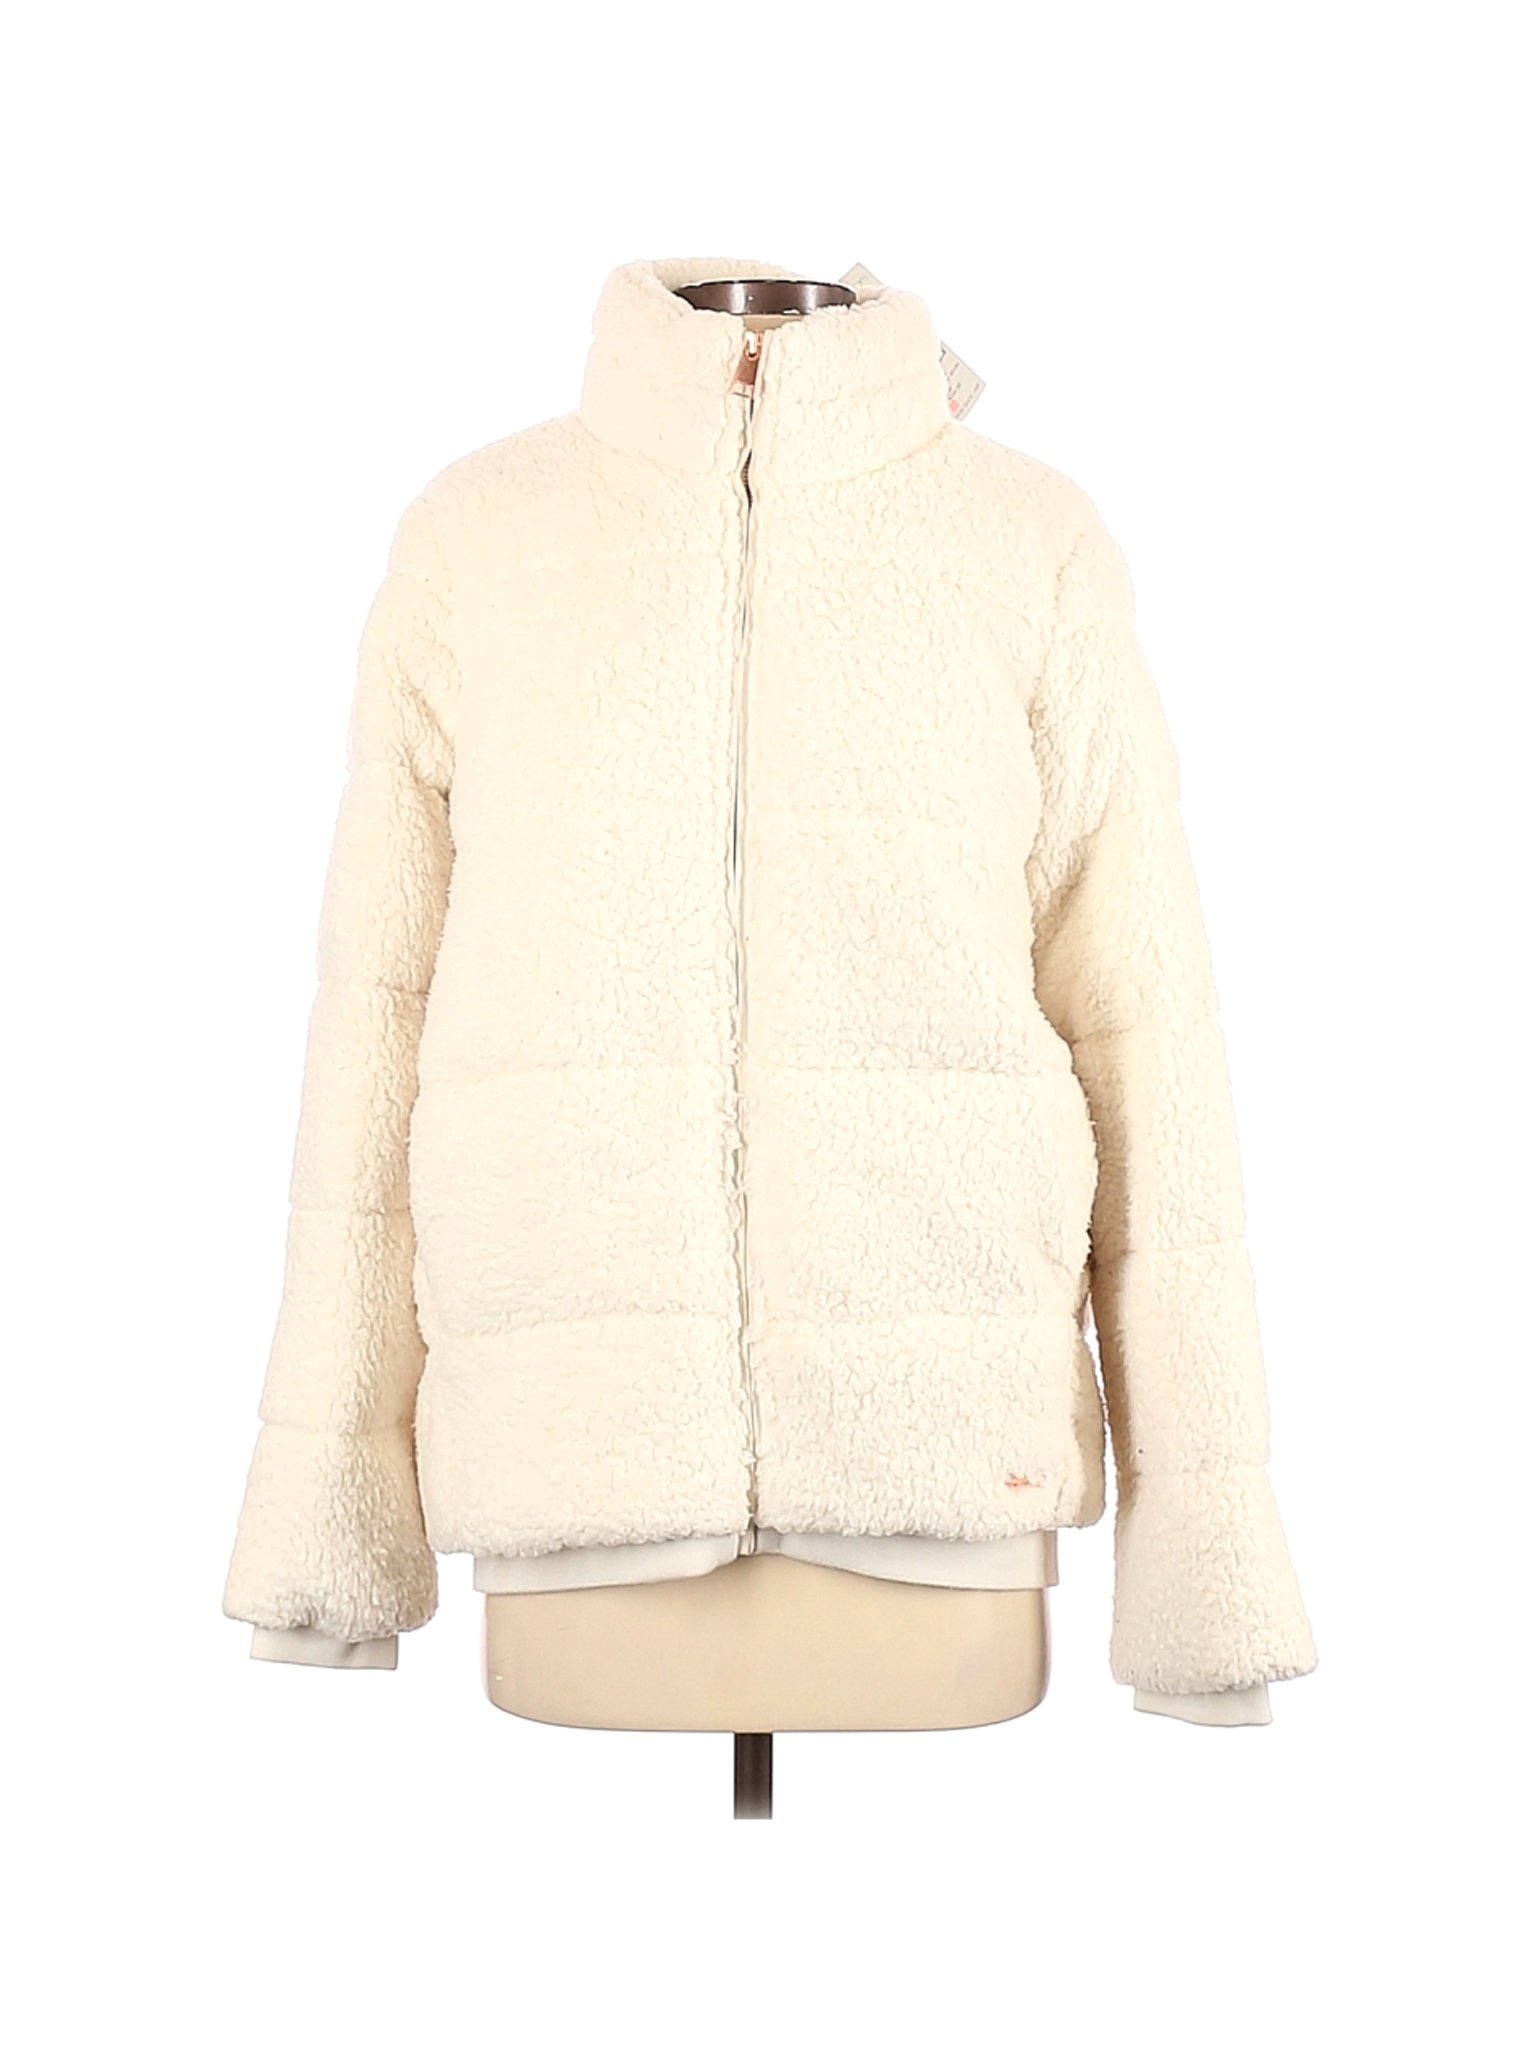 NWT Sweaty Betty Women Ivory Faux Fur Jacket XS | eBay